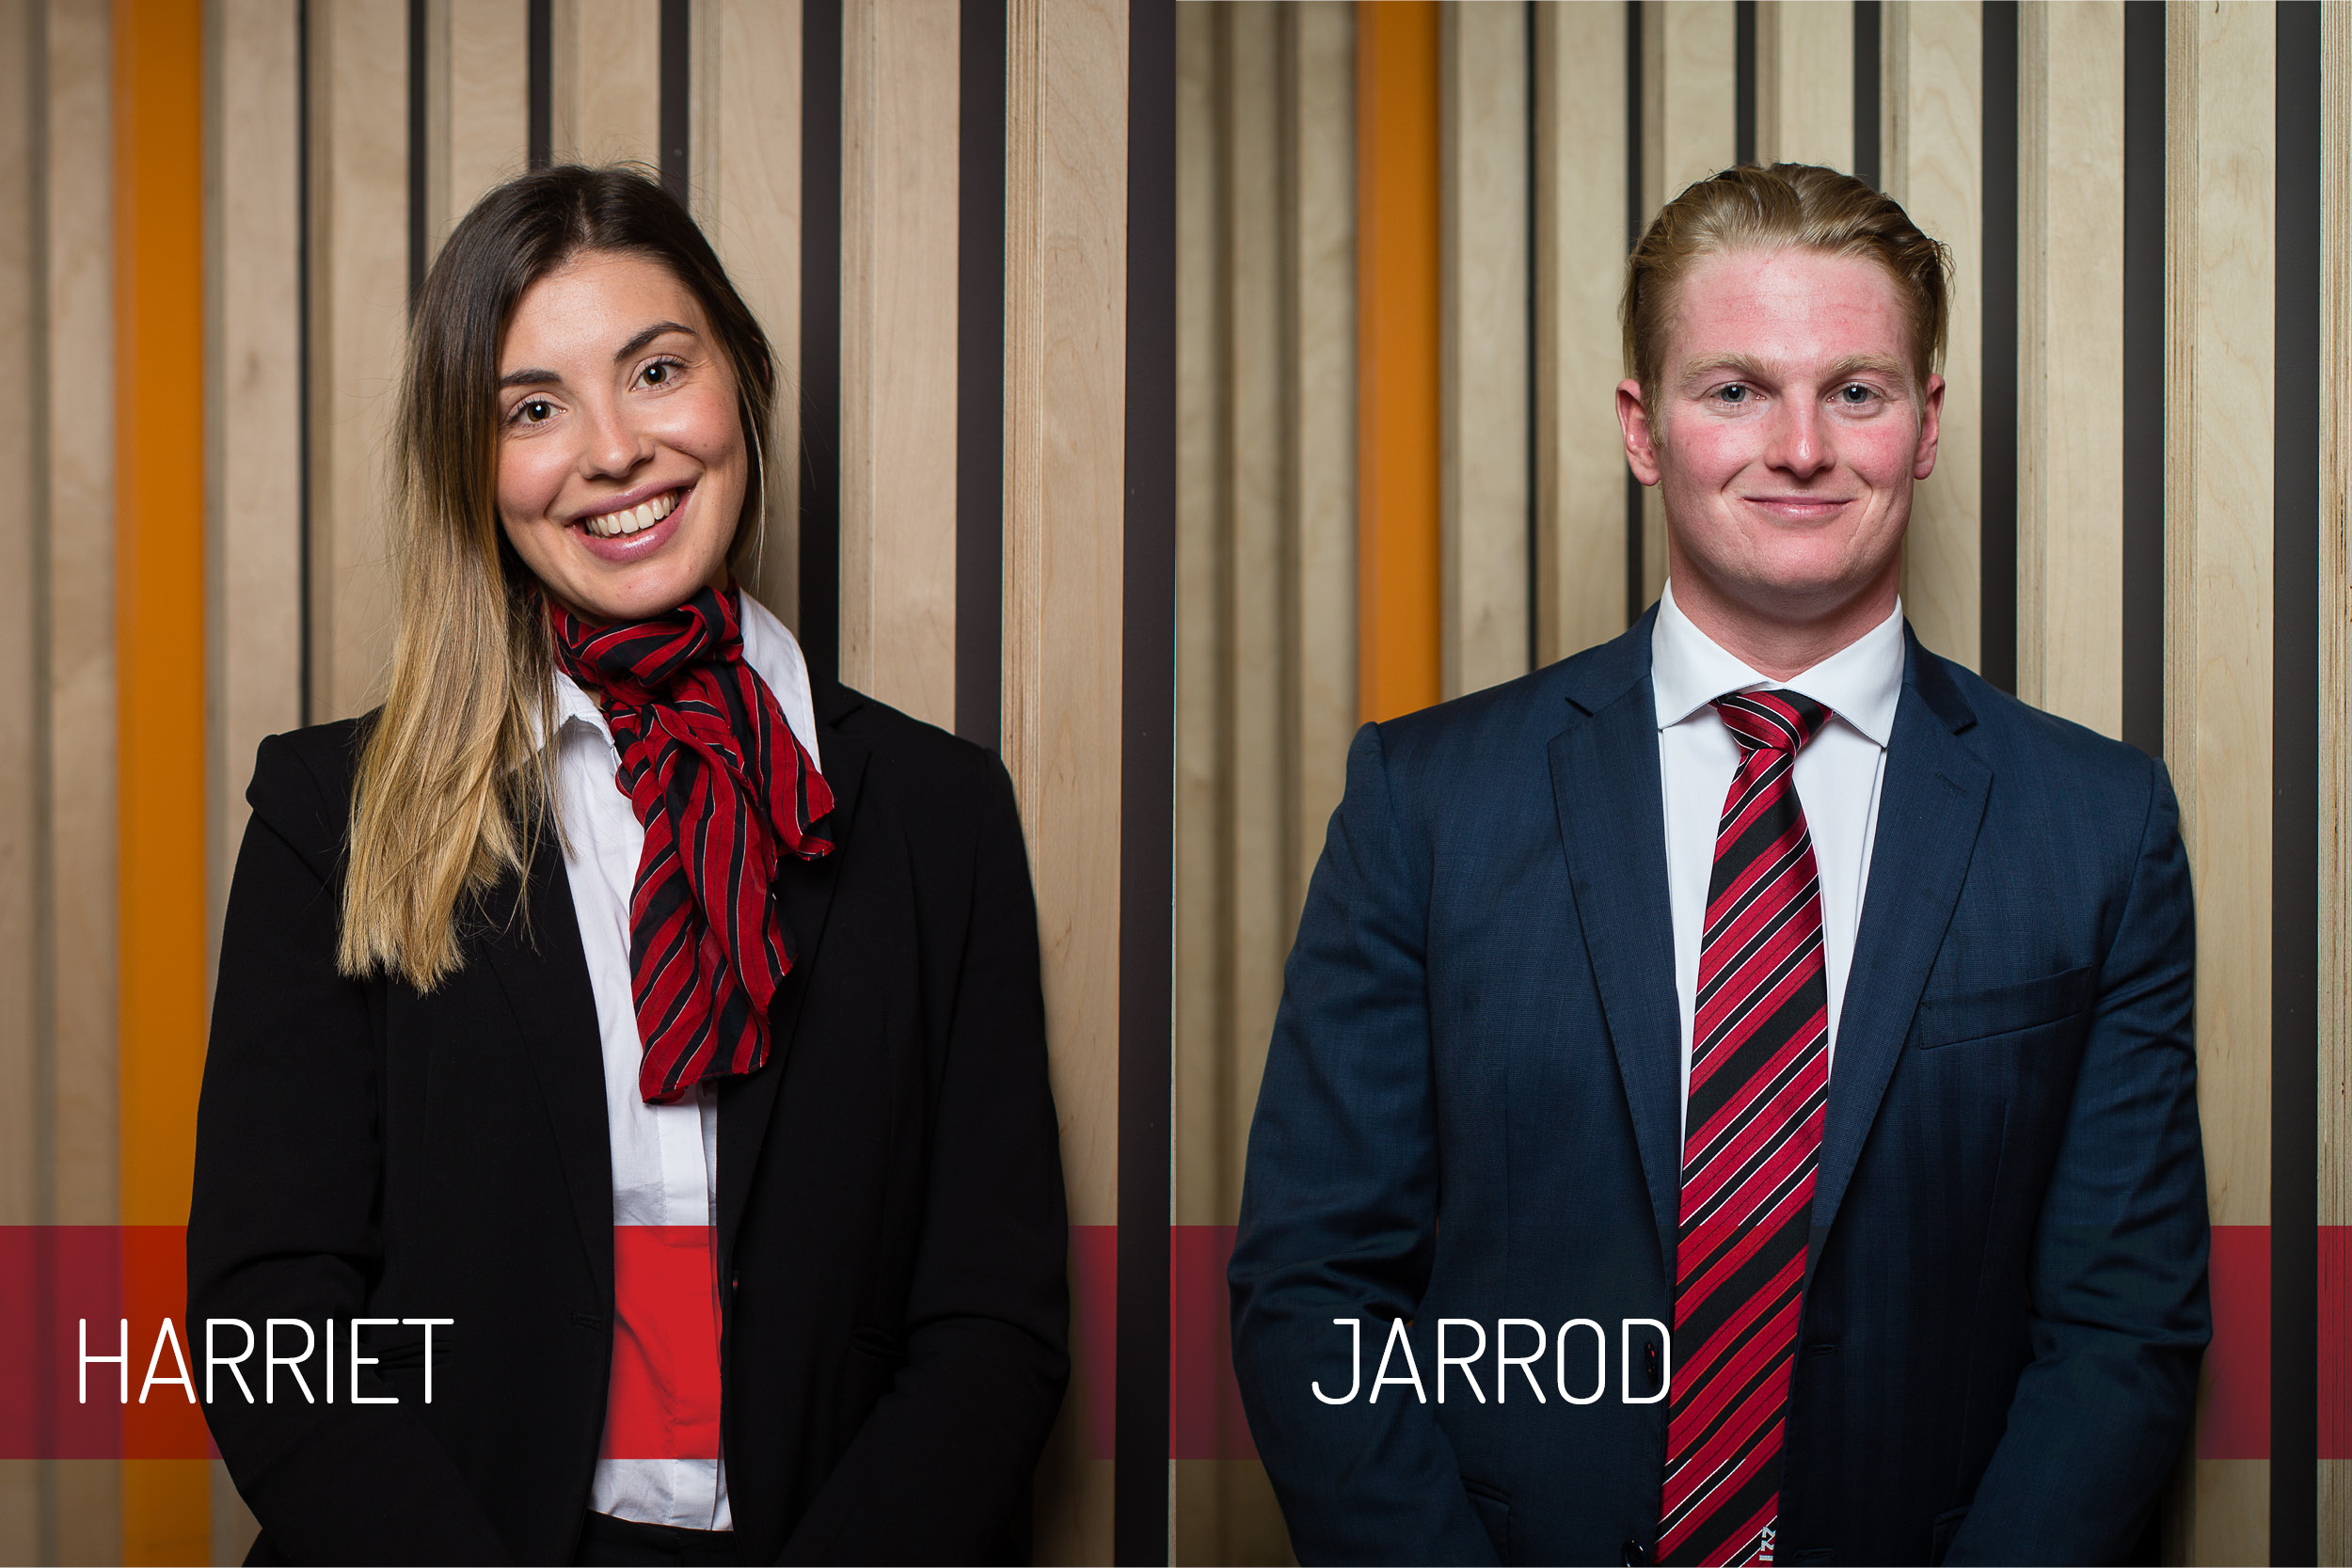 Harriet & Jarrod named as members of Property Council Committee